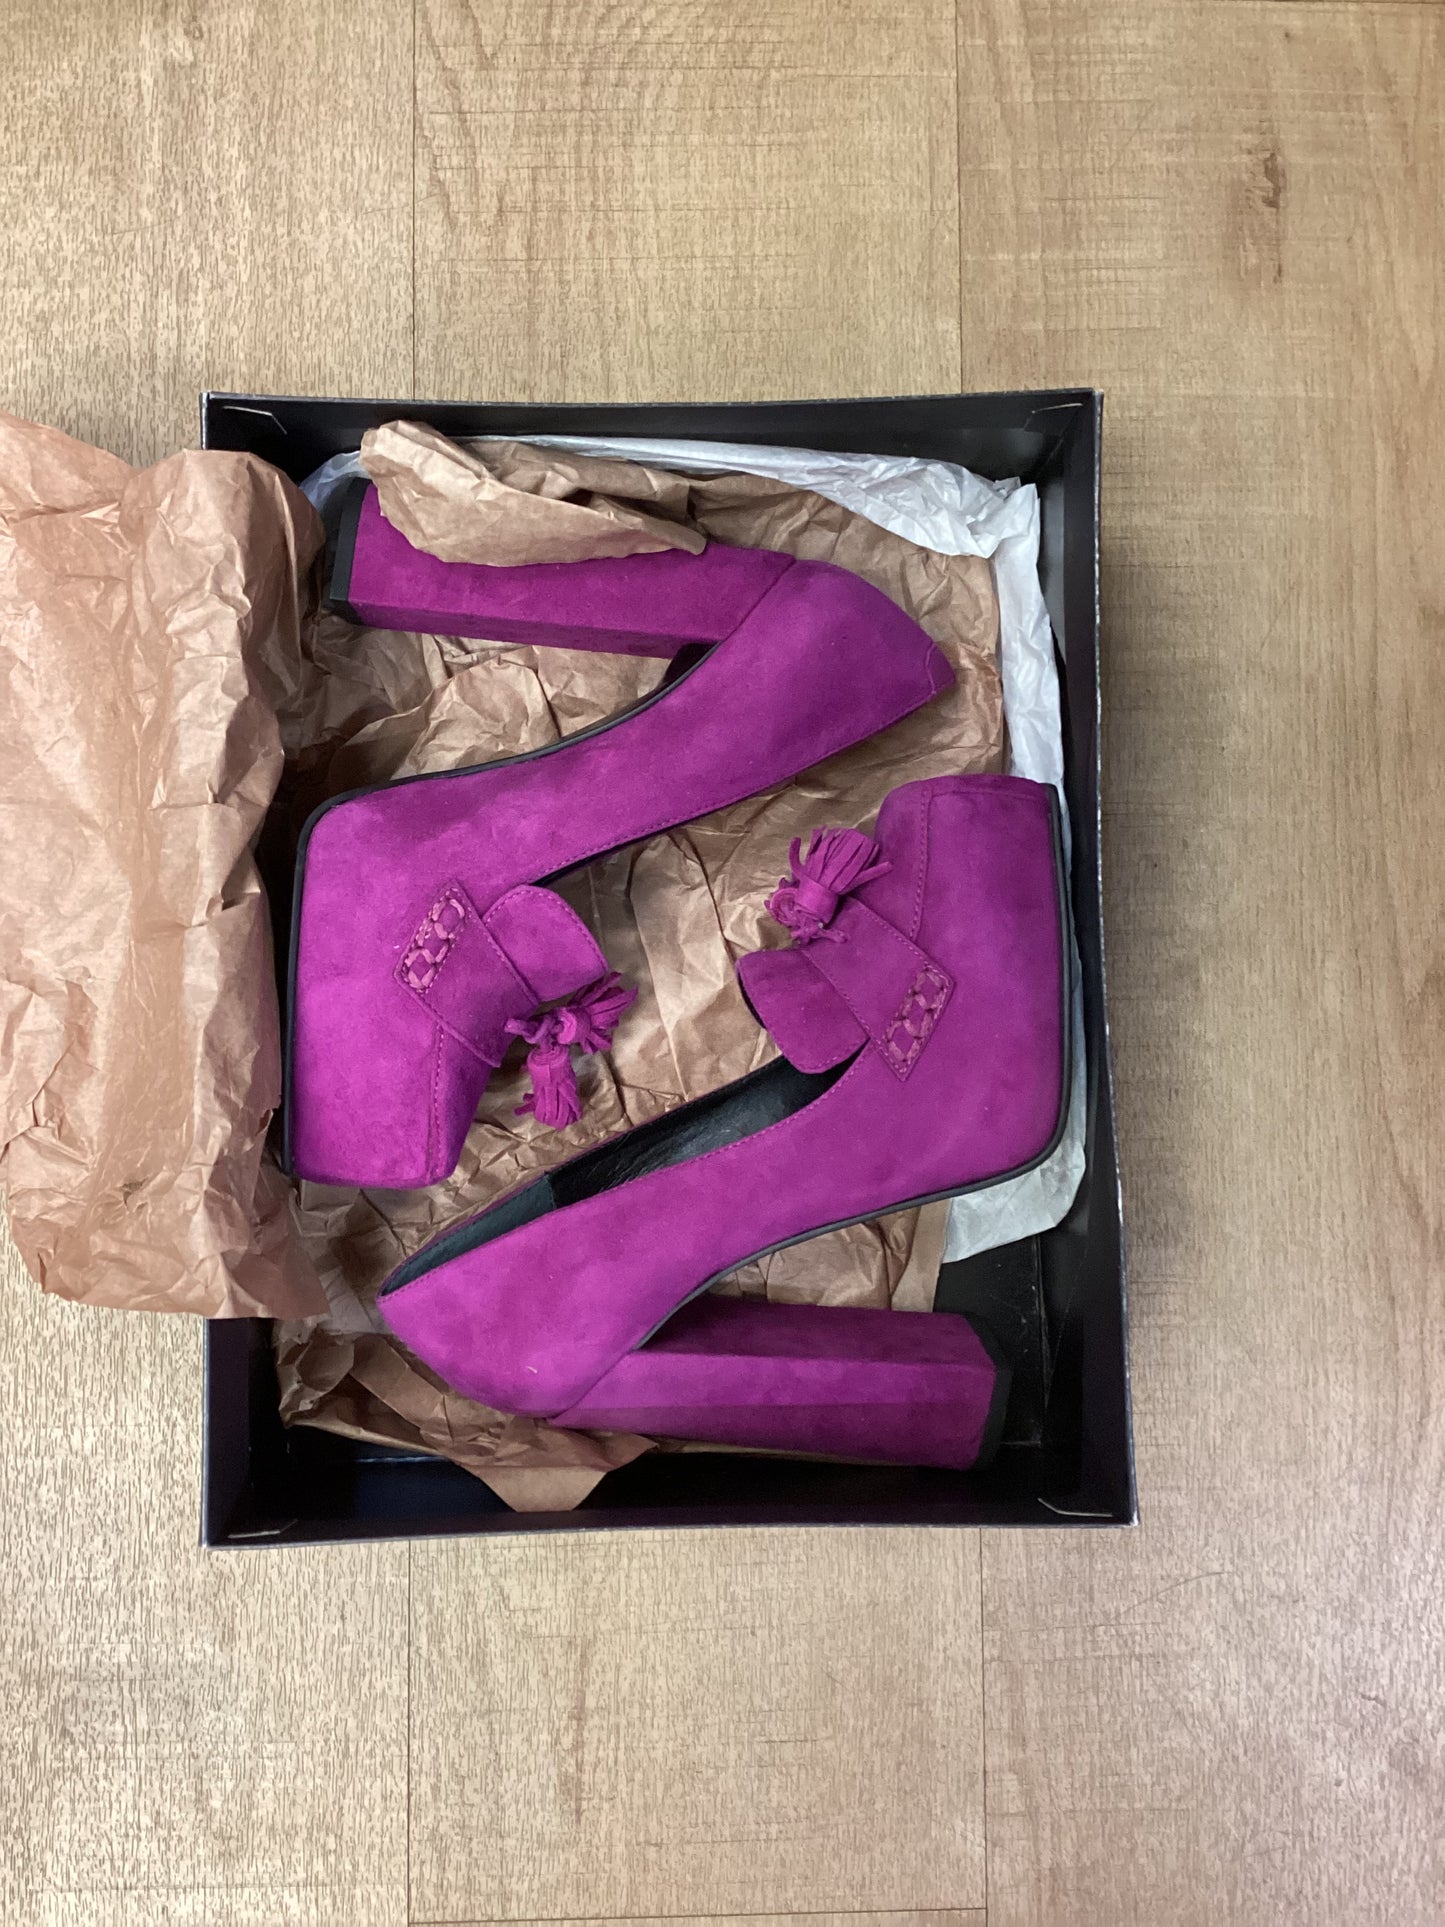 Kurt Geiger Purple Leather Heels Size 6